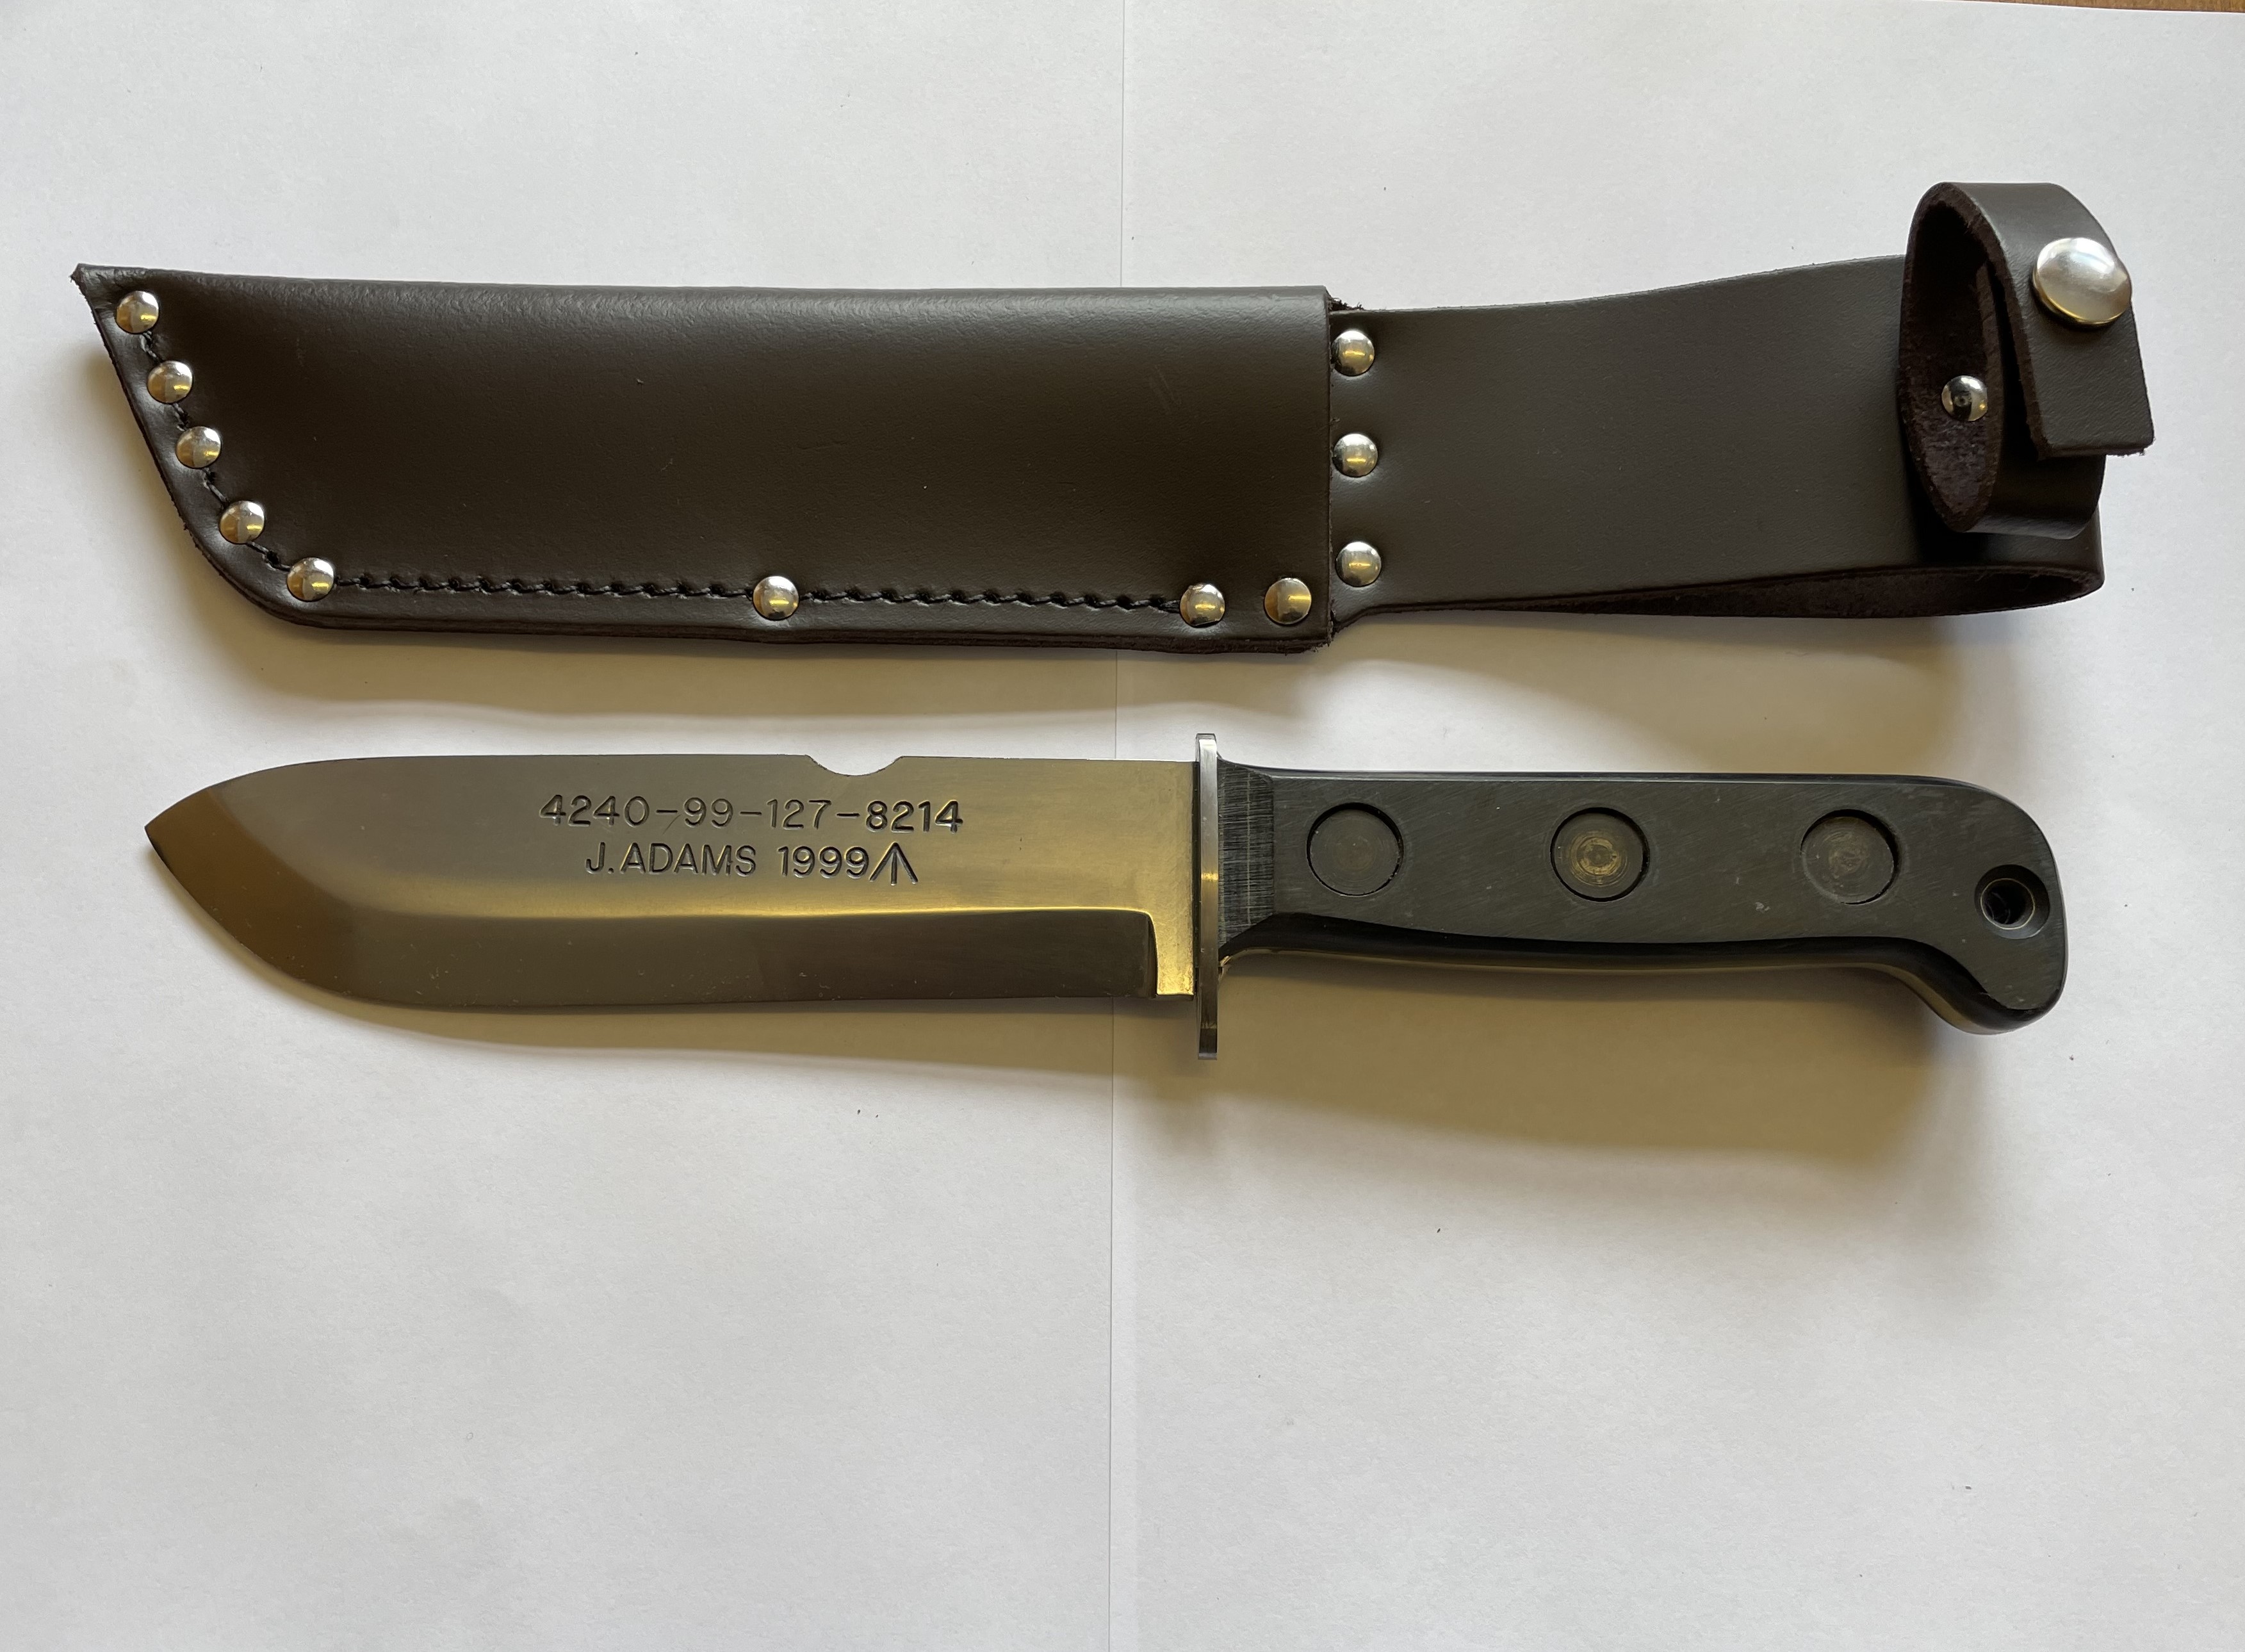 SURVIVAL KNIFE WITH STRIKING NOTCH, BLACK FIBRE HANDLE